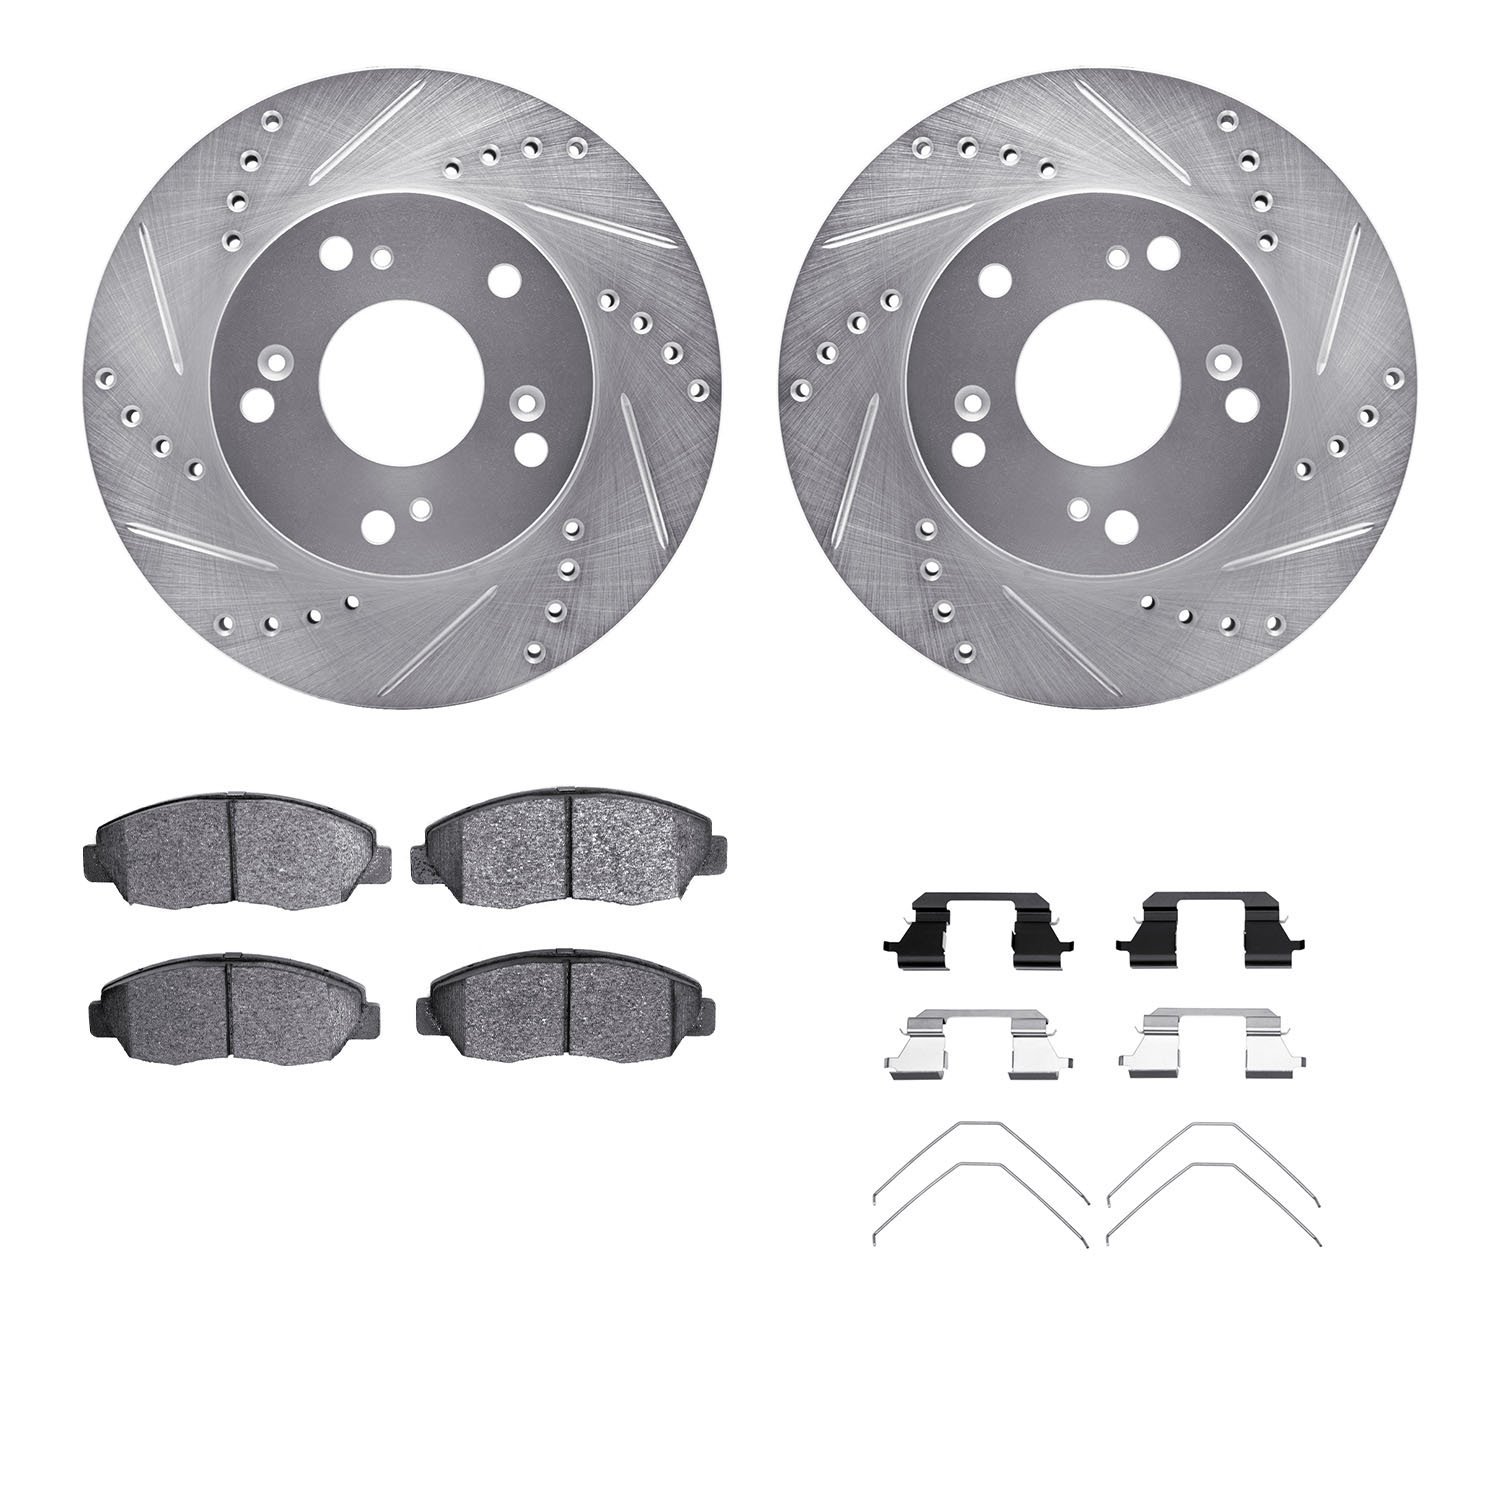 7312-59091 Drilled/Slotted Brake Rotor with 3000-Series Ceramic Brake Pads Kit & Hardware [Silver], 2012-2015 Acura/Honda, Posit